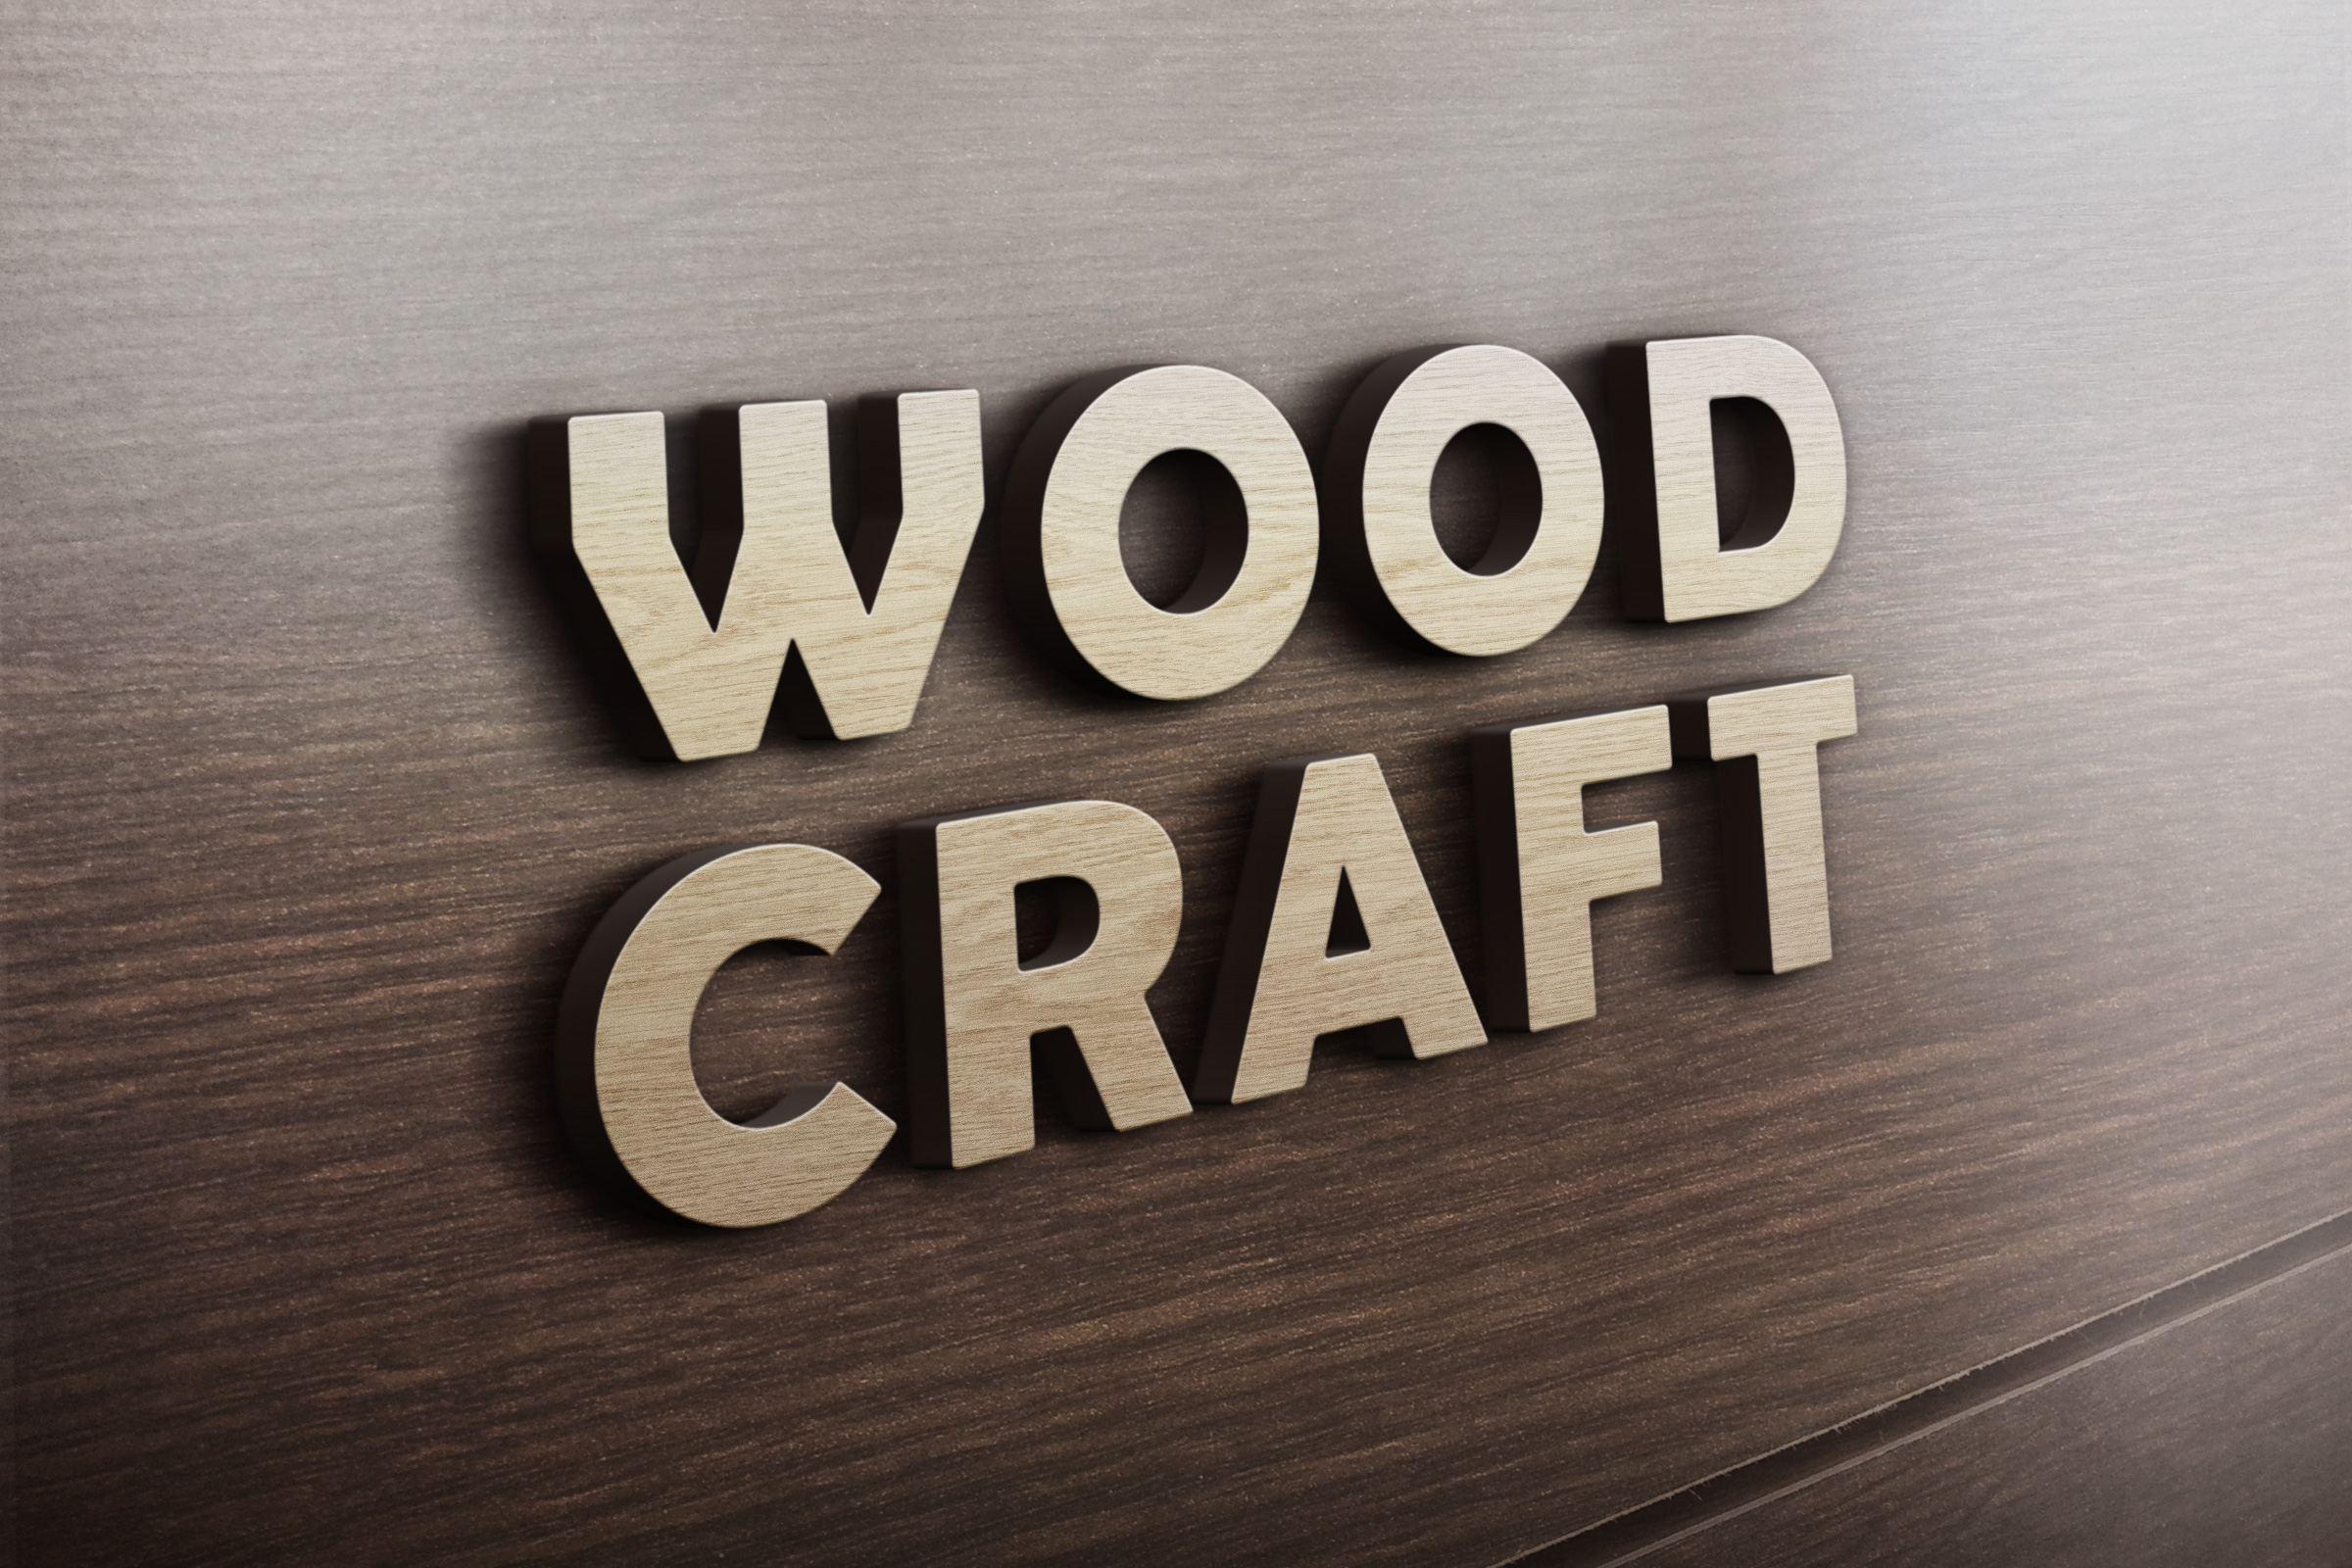 Wooden 3D Logo Mockup